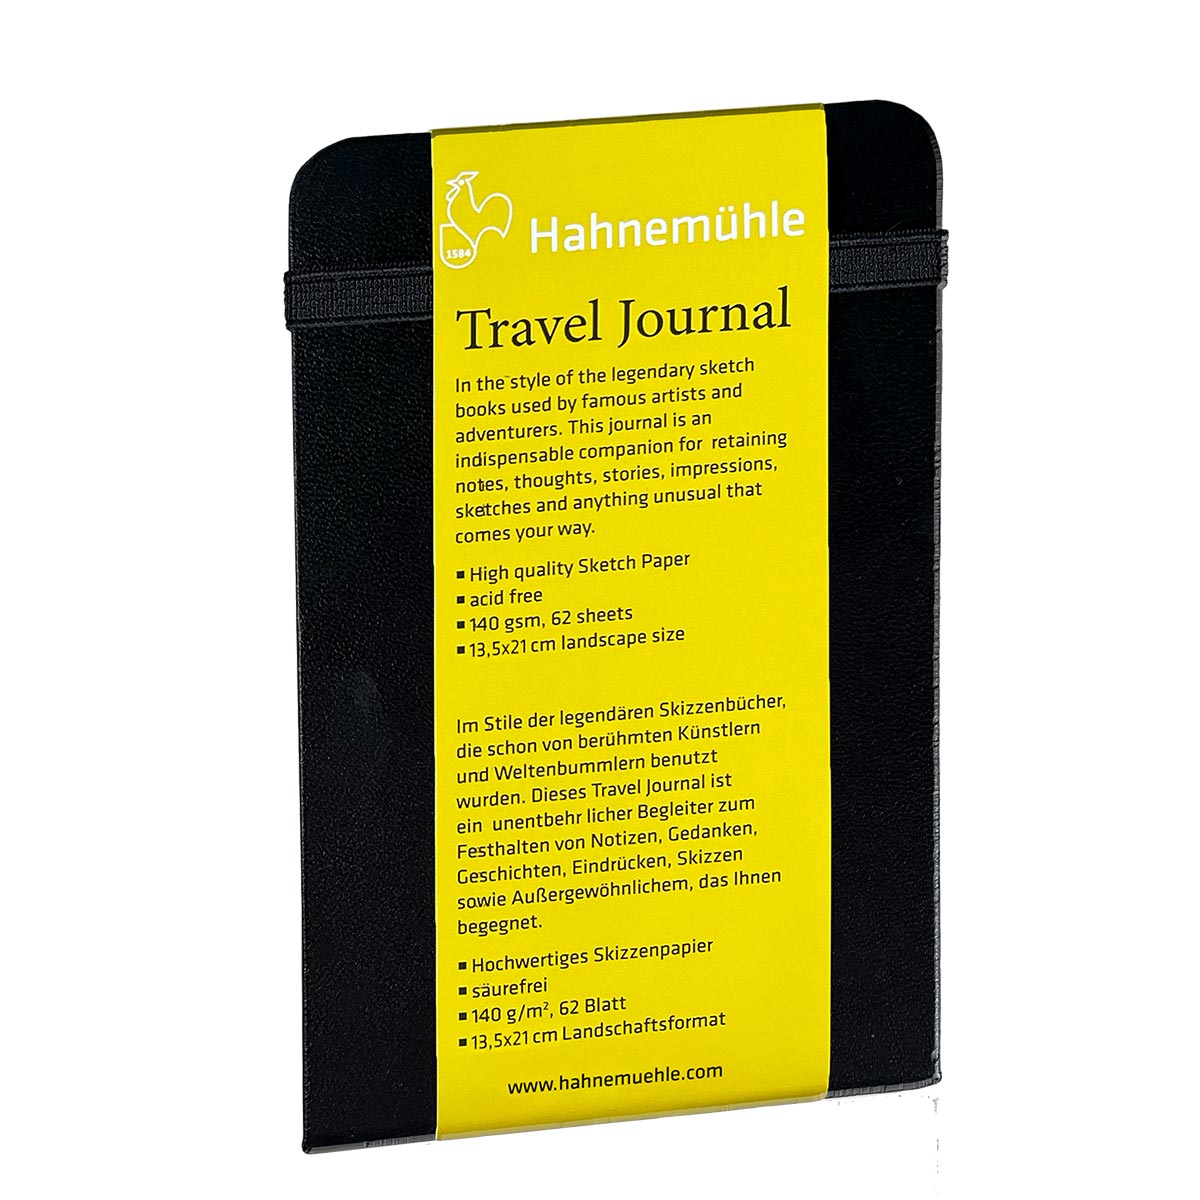 Hahnemuhle - Journal de voyage 140gsm 62 feuilles 13x21cm - paysage